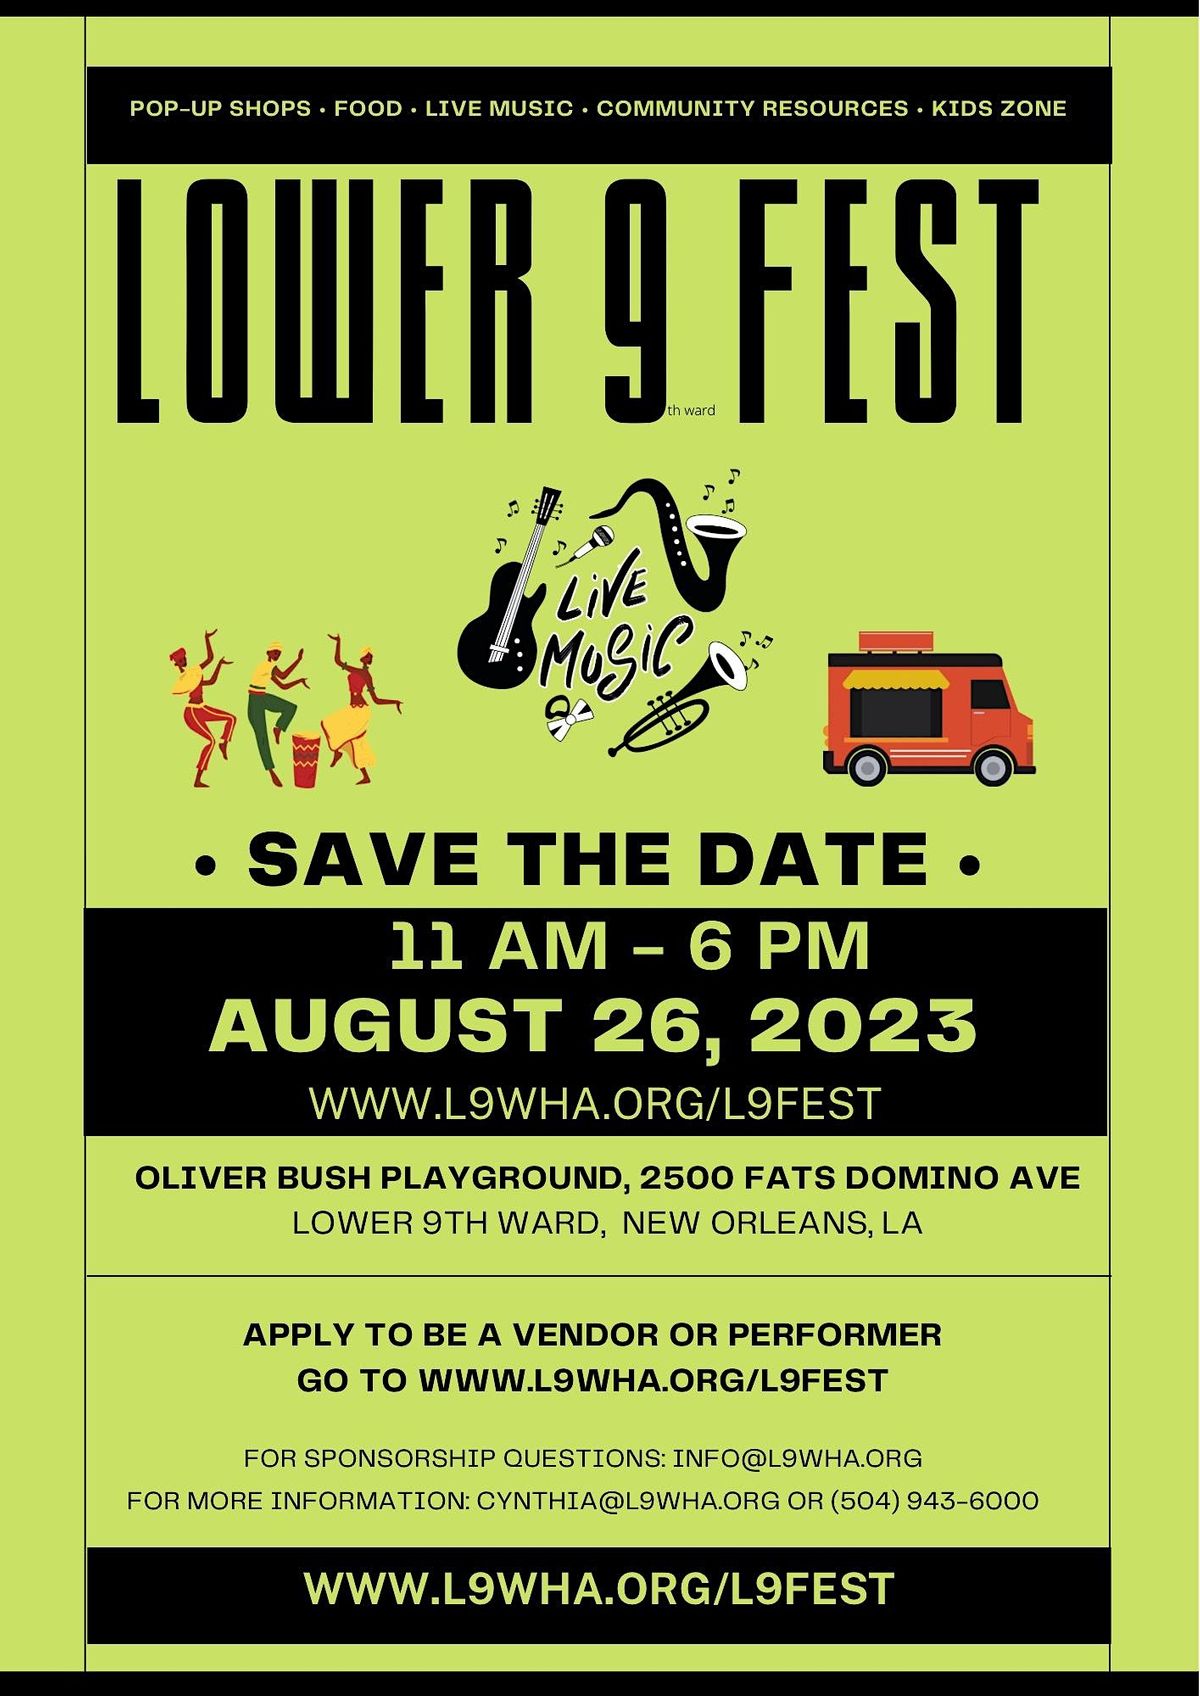 Lower 9 Festival Oliver Bush Playground, New Orleans, LA August 26